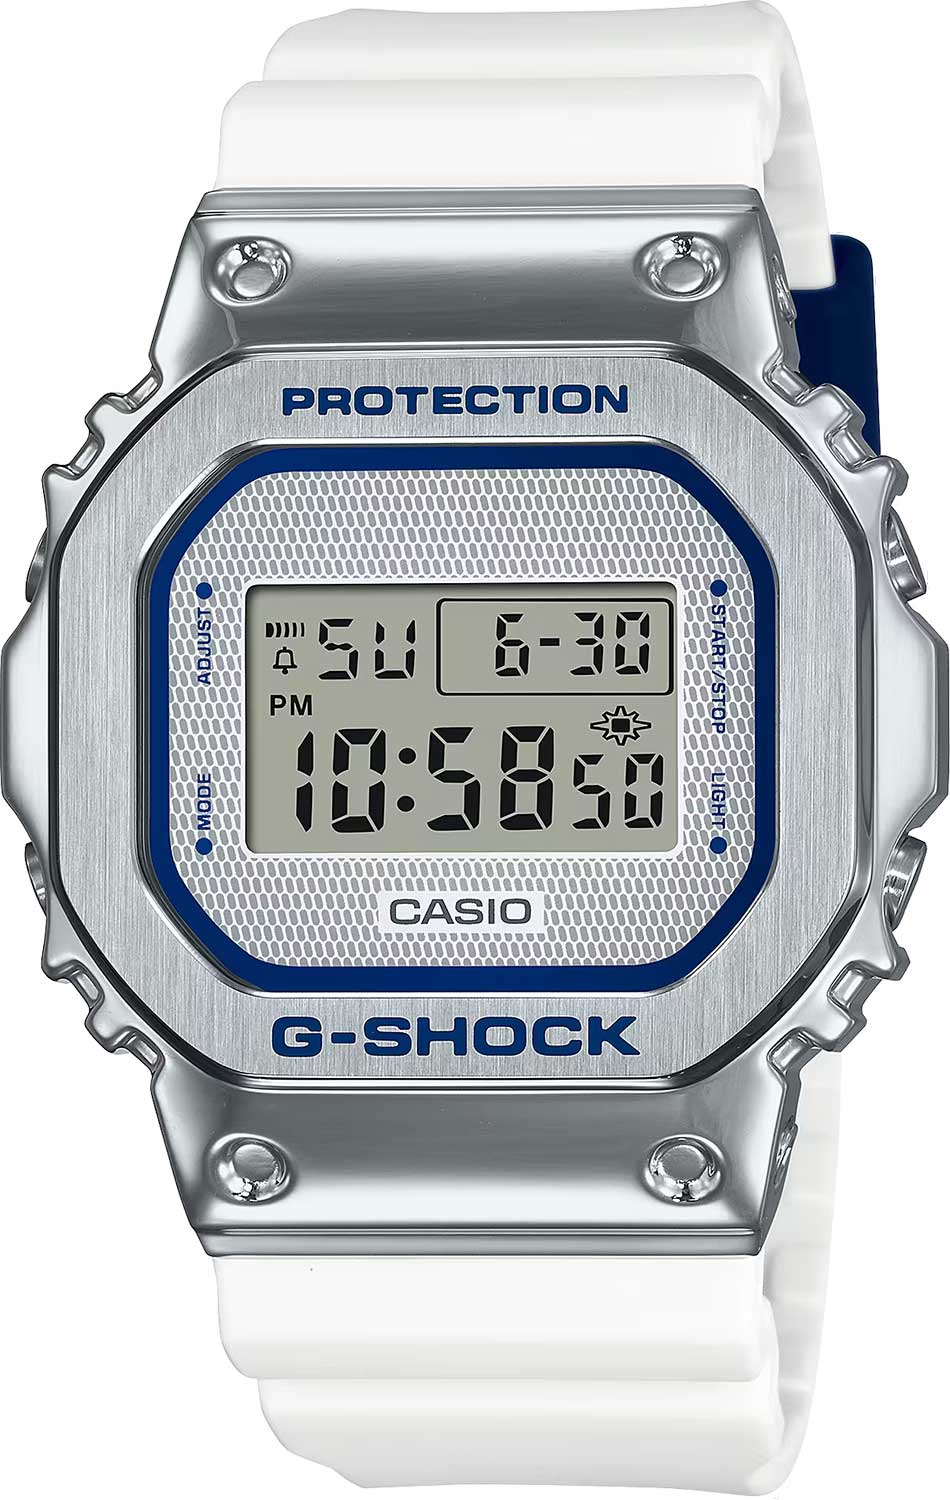    Casio G-SHOCK GM-5600LC-7E  